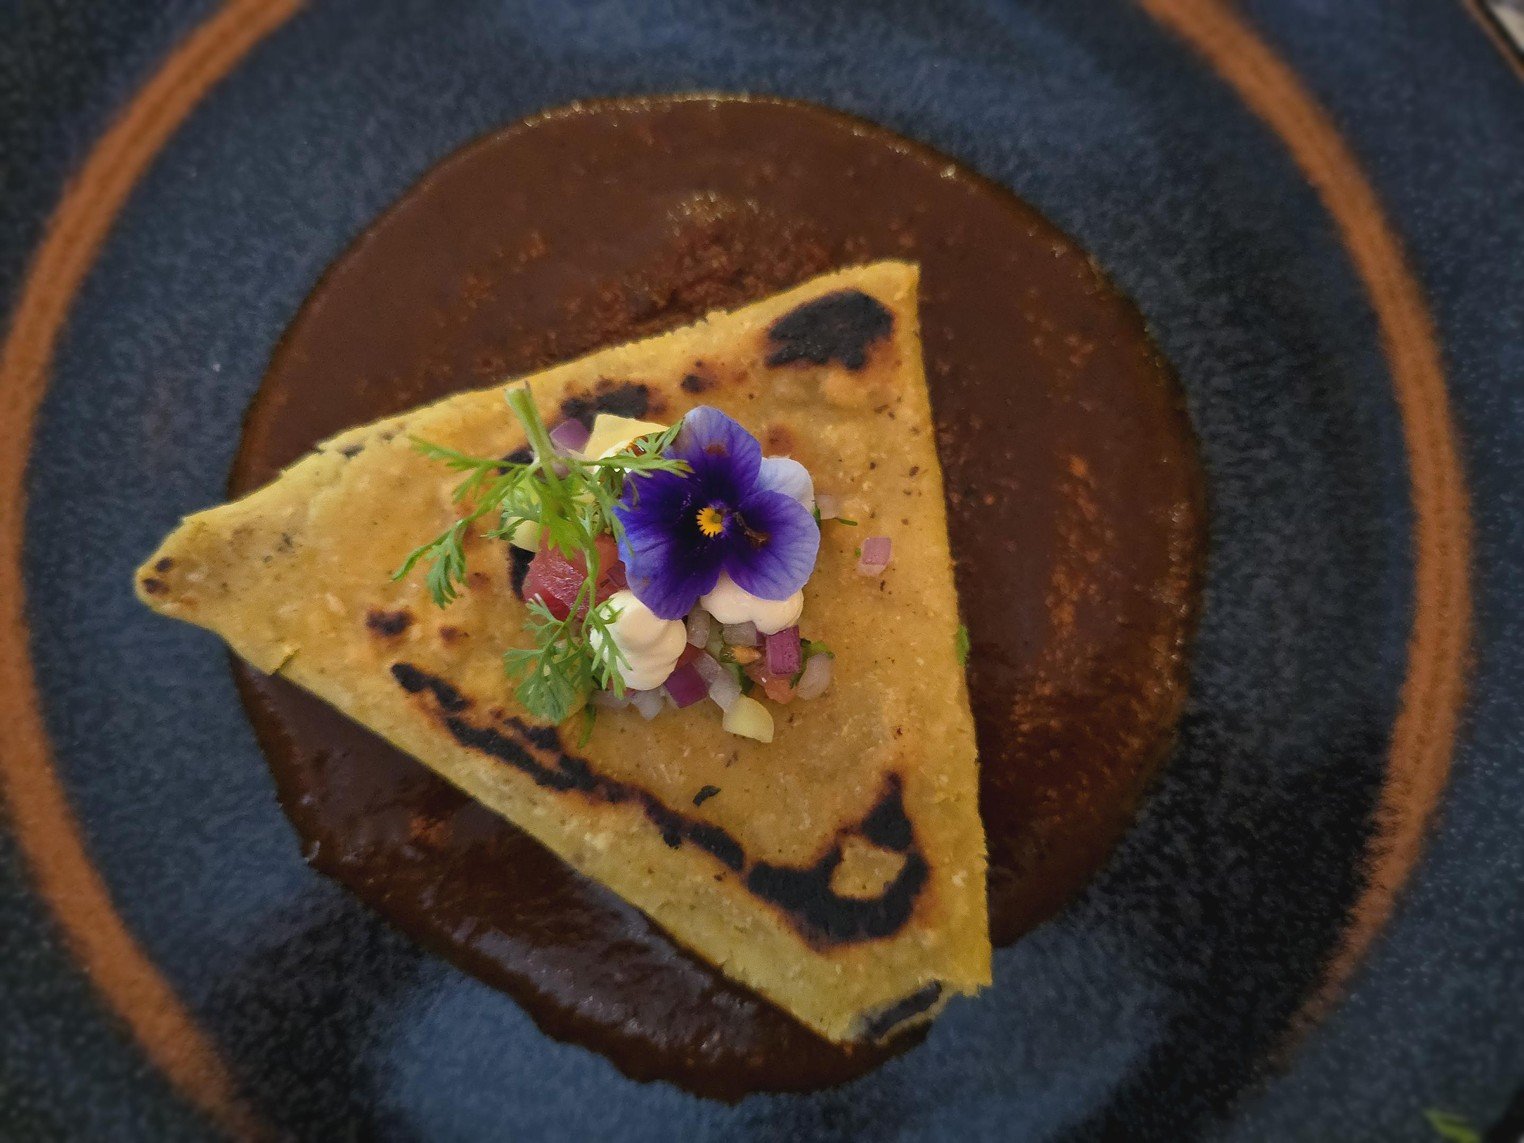 Uptown Fine Dining Mexican Restaurant Xiquita Opens in Denver